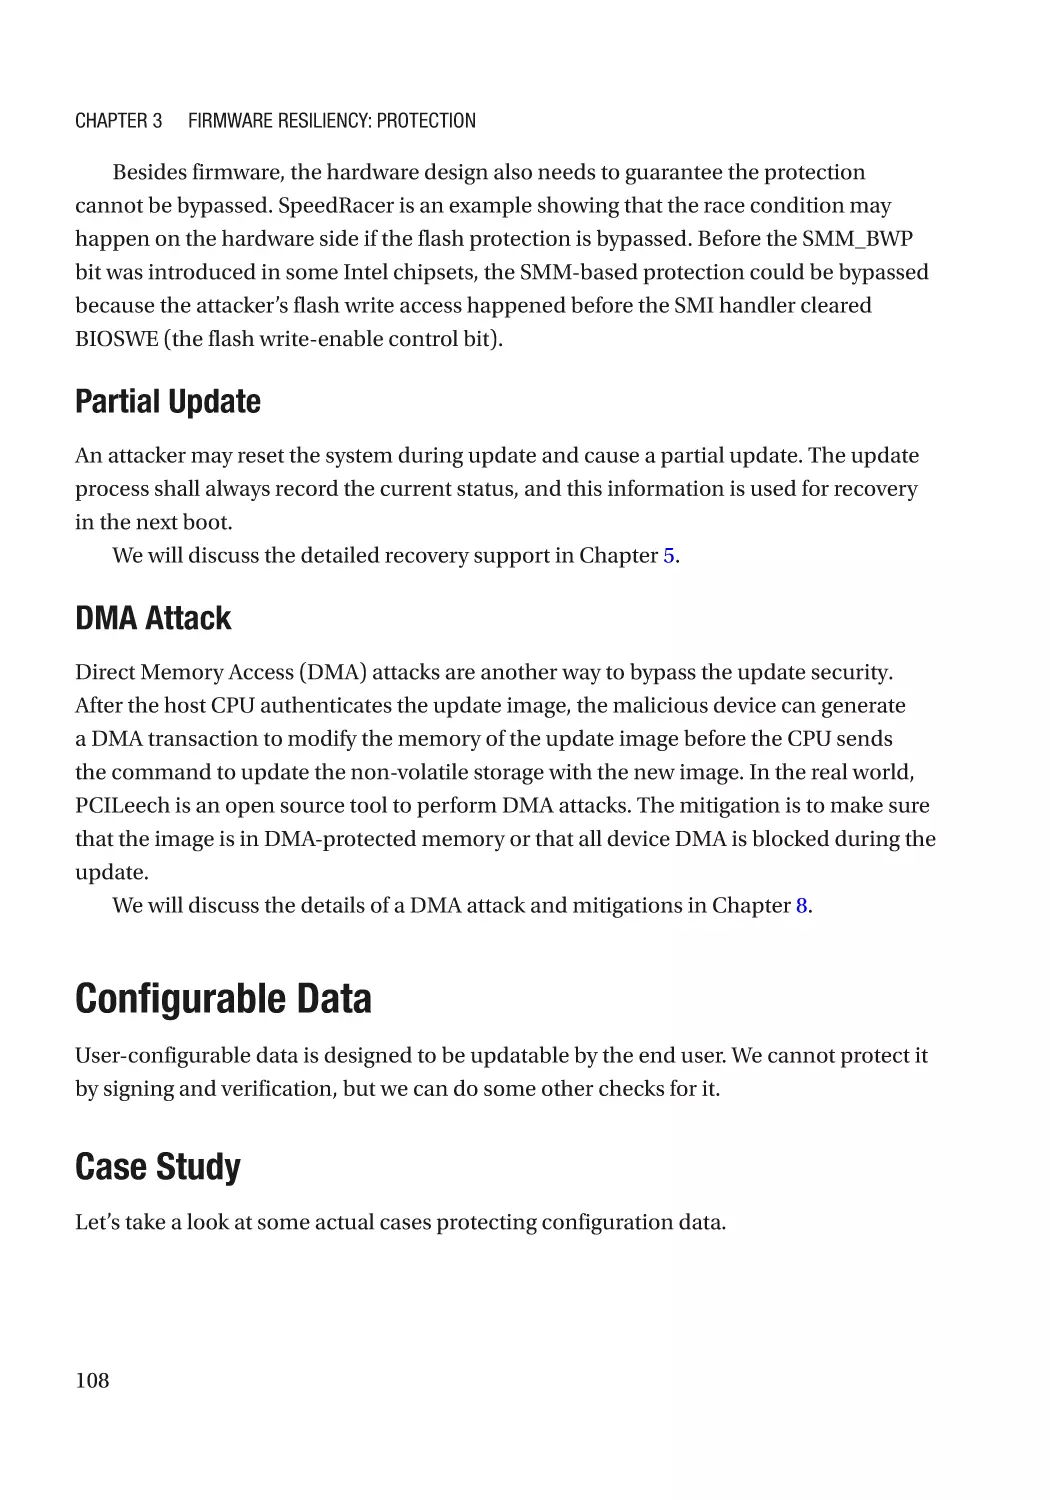 Partial Update
DMA Attack
Configurable Data
Case Study